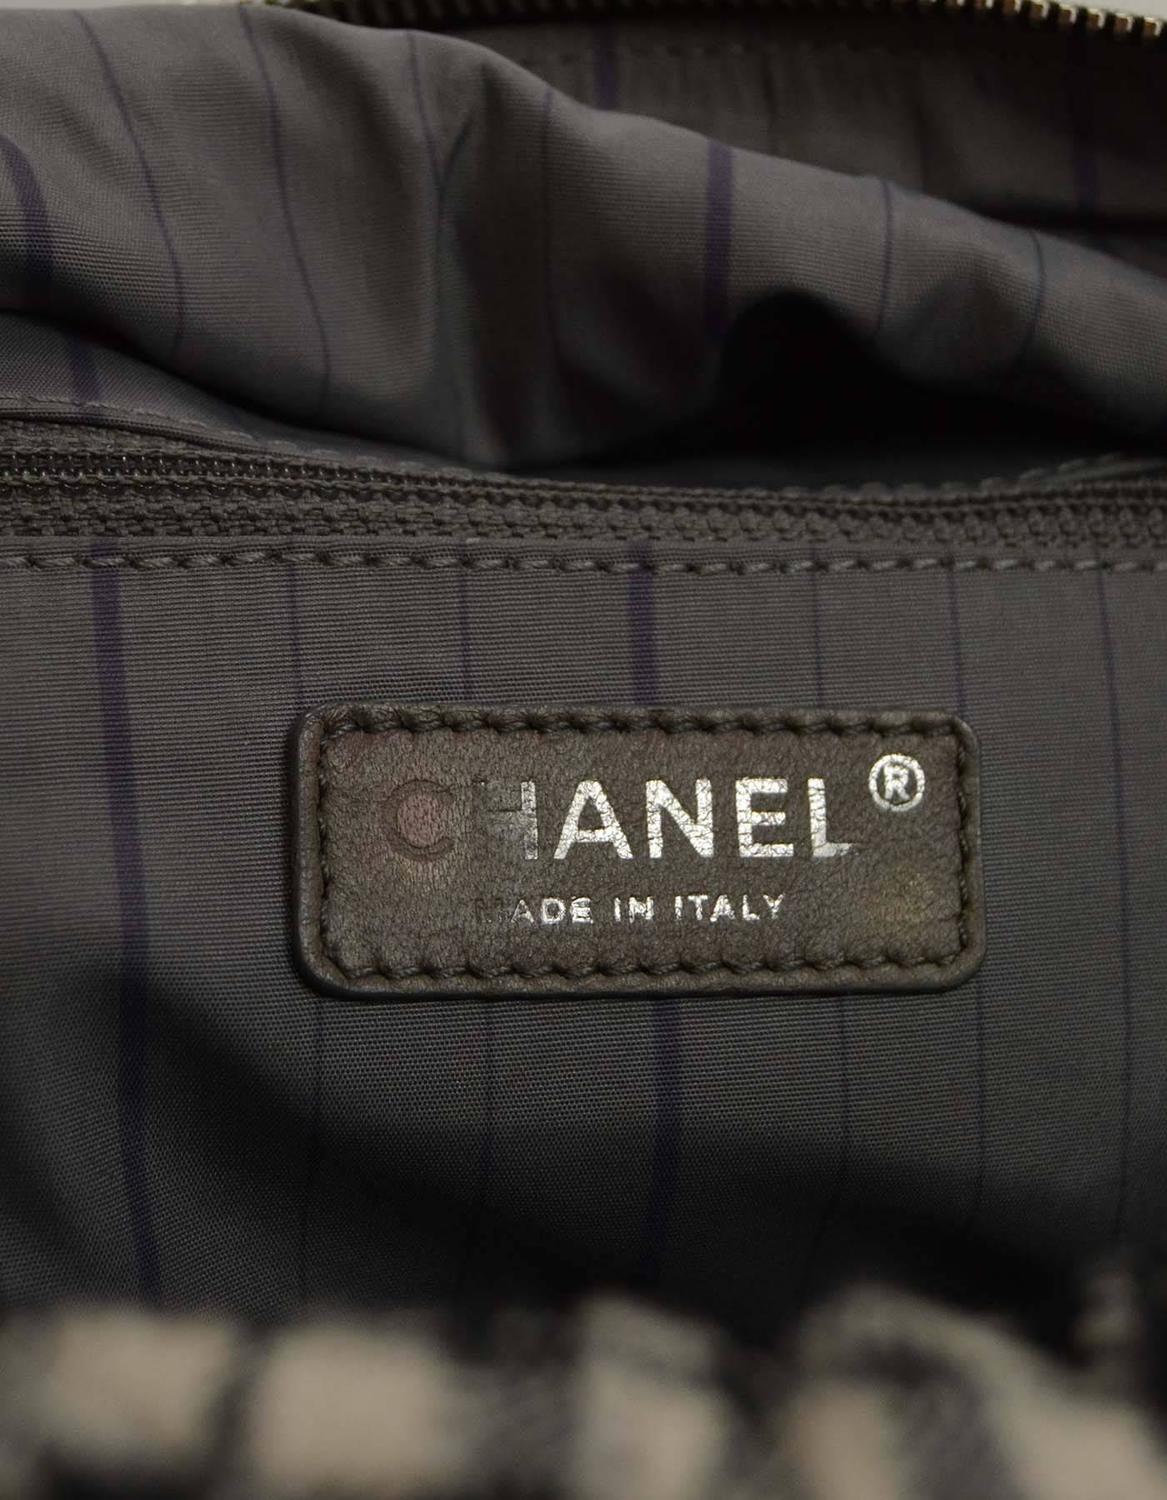 Chanel Leather and Tweed Shoulder Bag SHW For Sale at 1stdibs